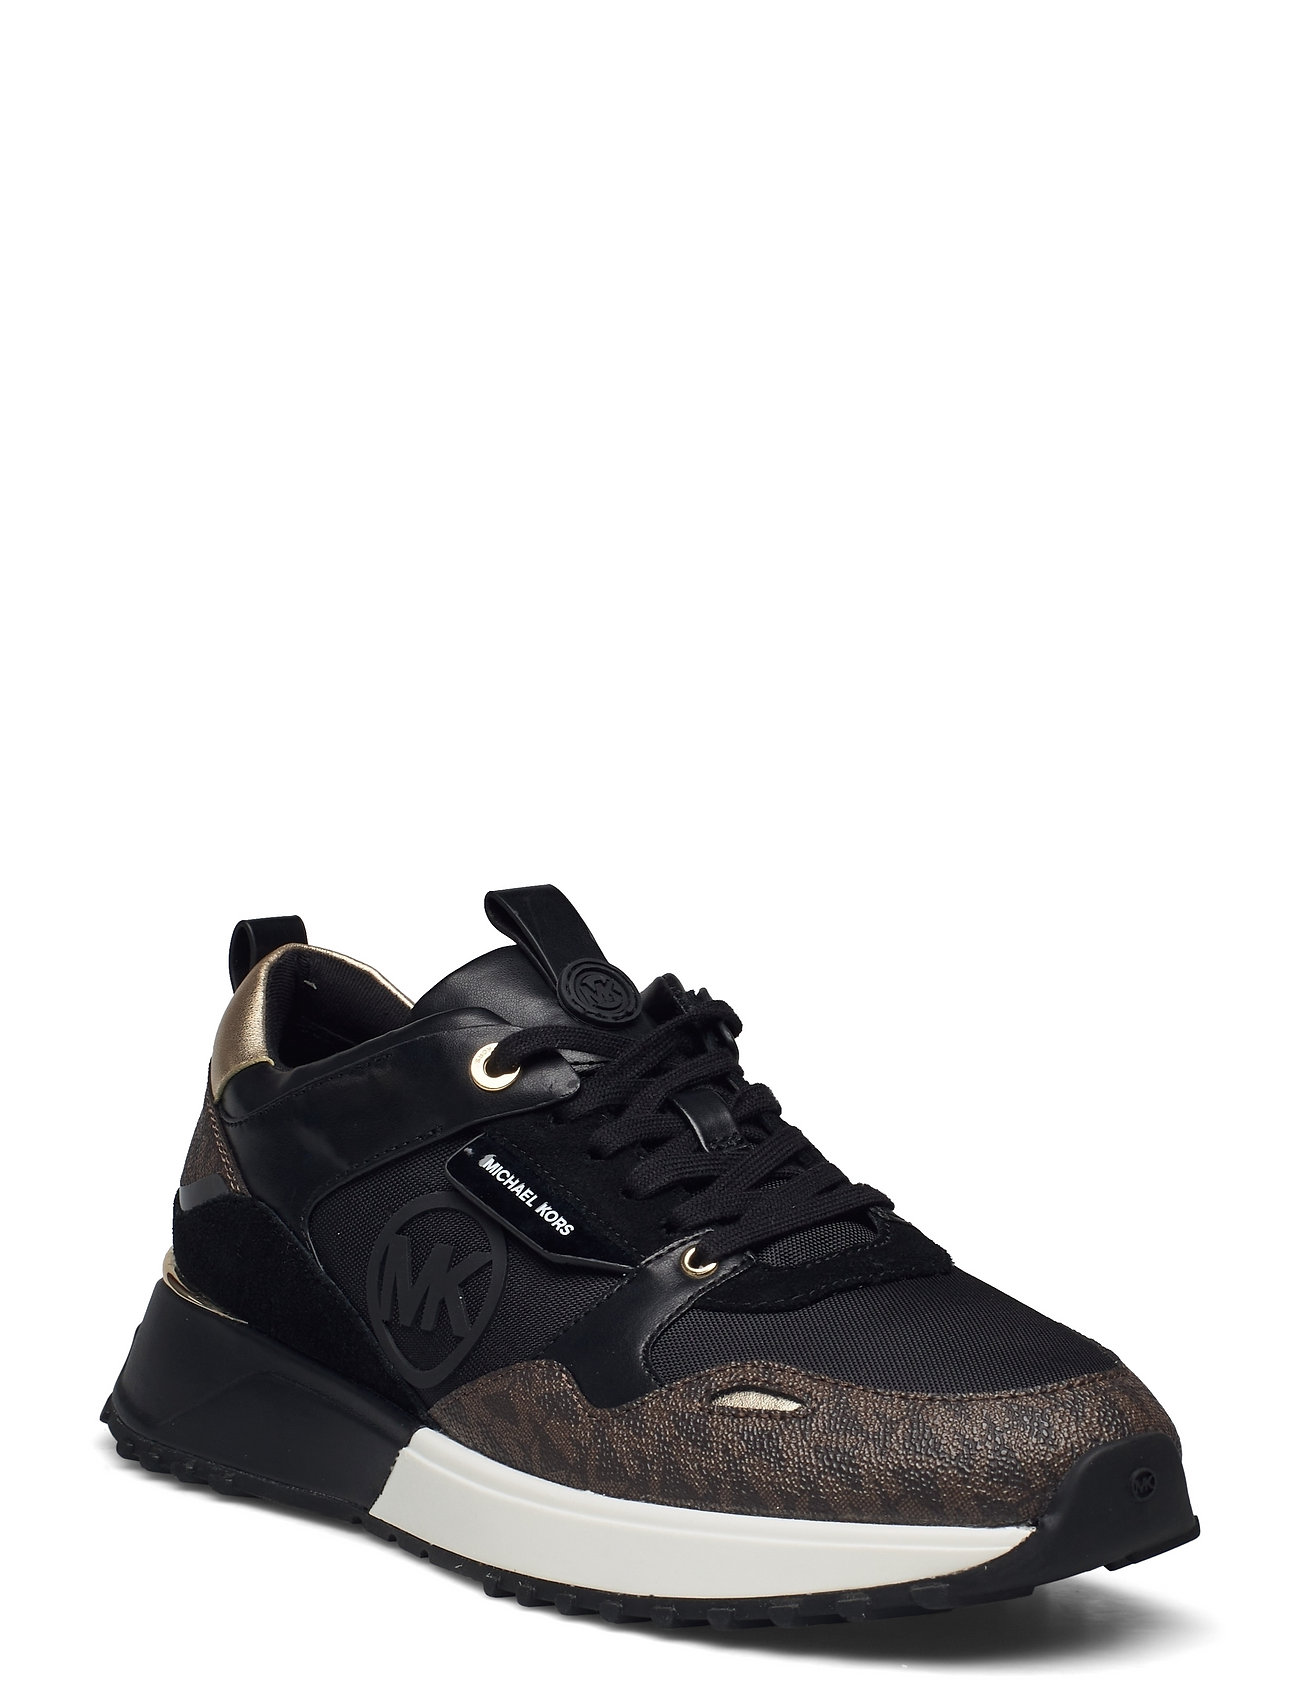 Michael Kors Trainer Theo Trainer - Low top sneakers 